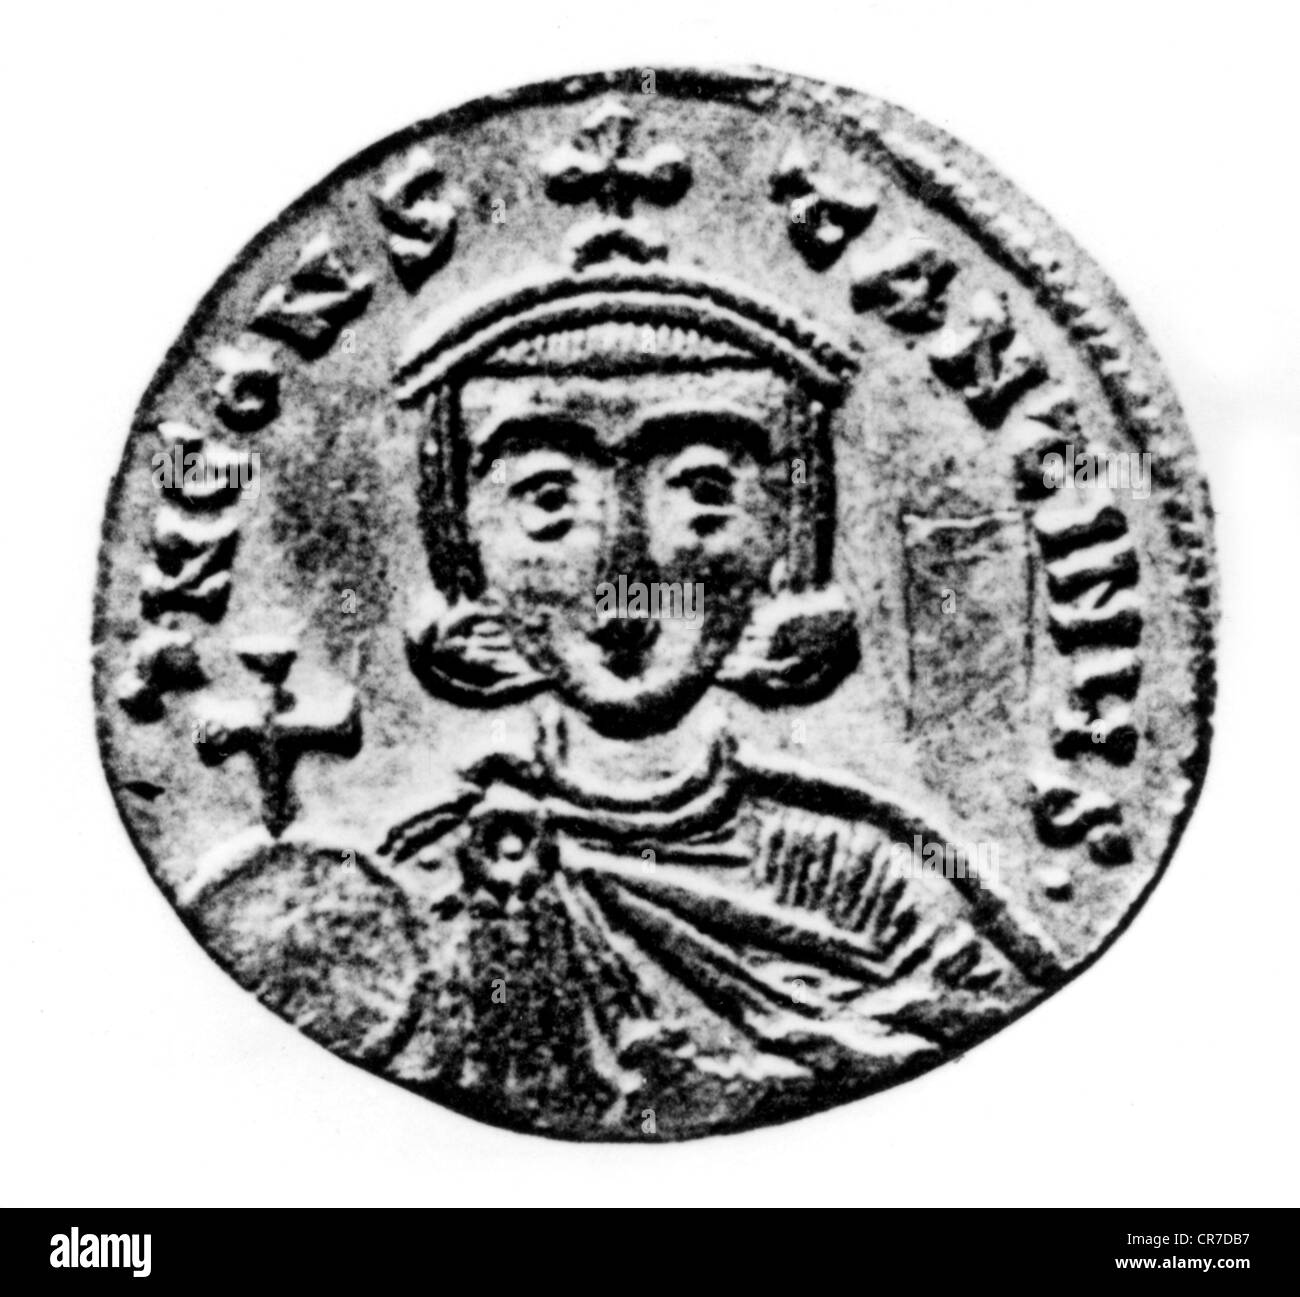 Constantine V, 718 - 14.9.775, East Roman Emperor 18.6.741 - 14.9.775, portrait, coin, circa 740, Isaurian dynasty, Byzantine Em Stock Photo